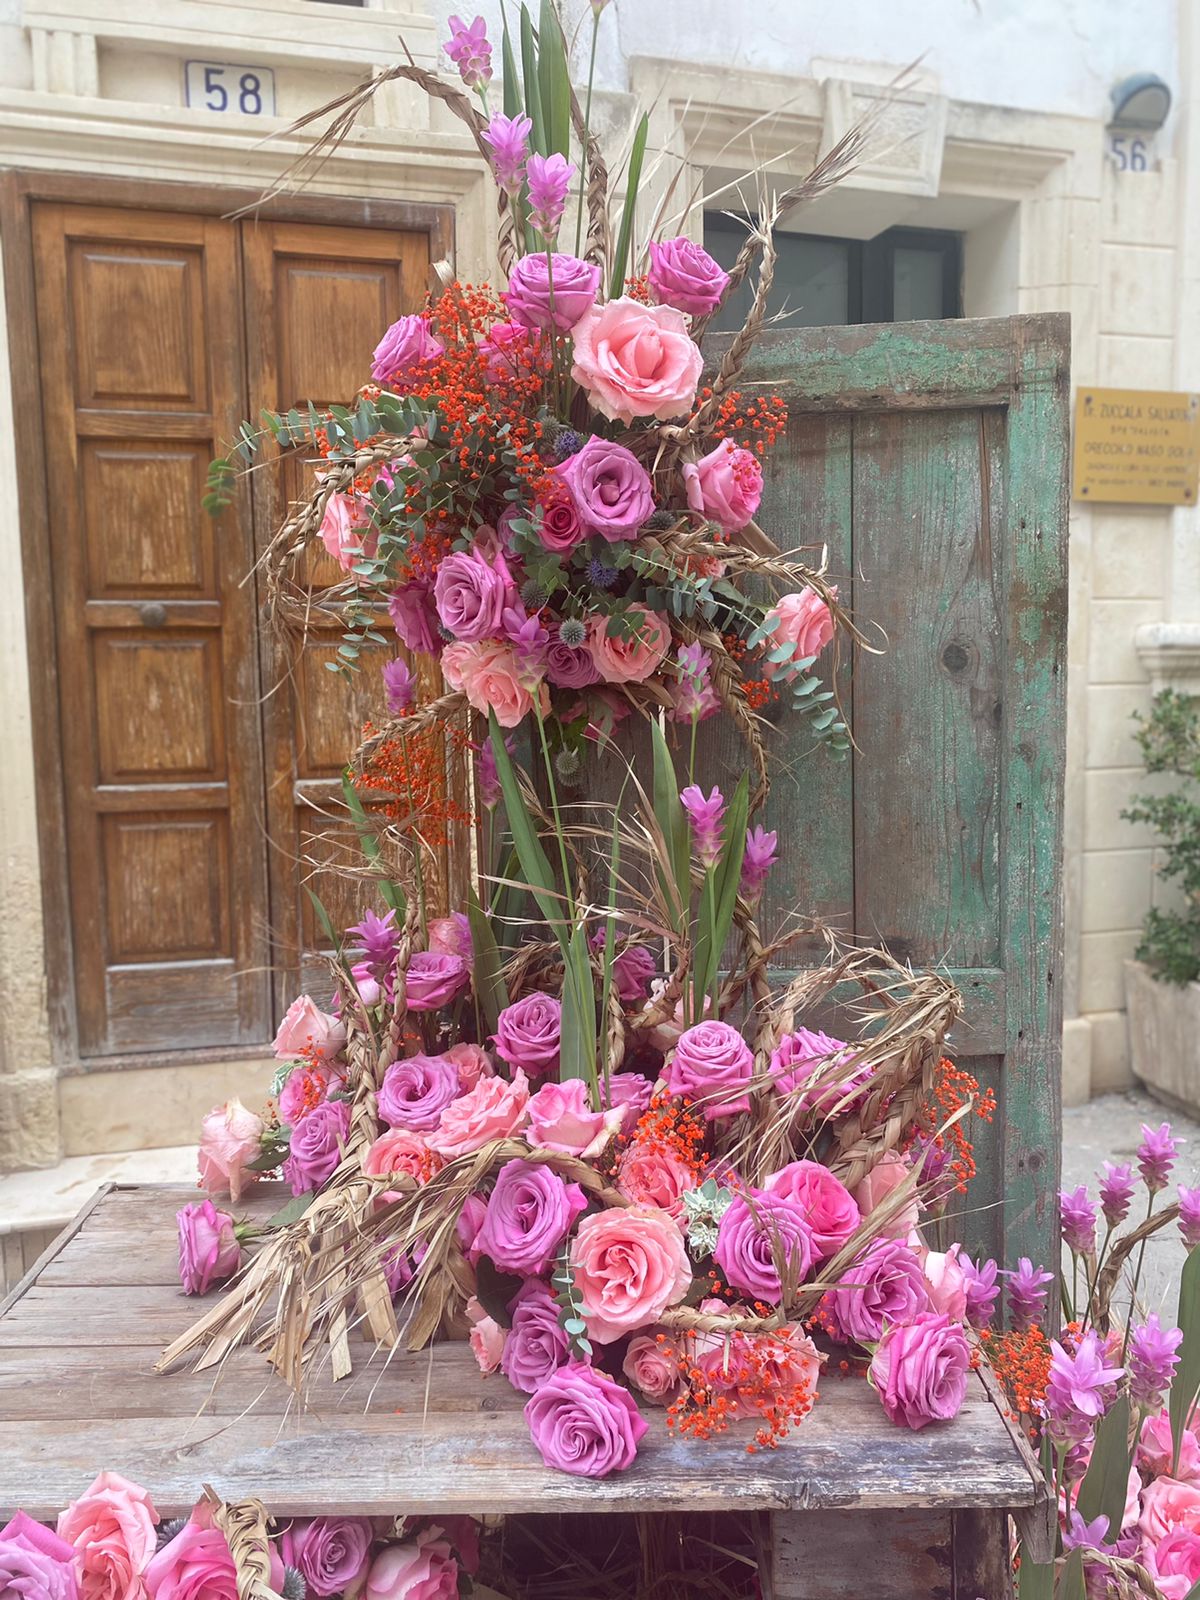 Naranjo Roses Pop Up in Leverano for Arteflorando - Article on Thursd